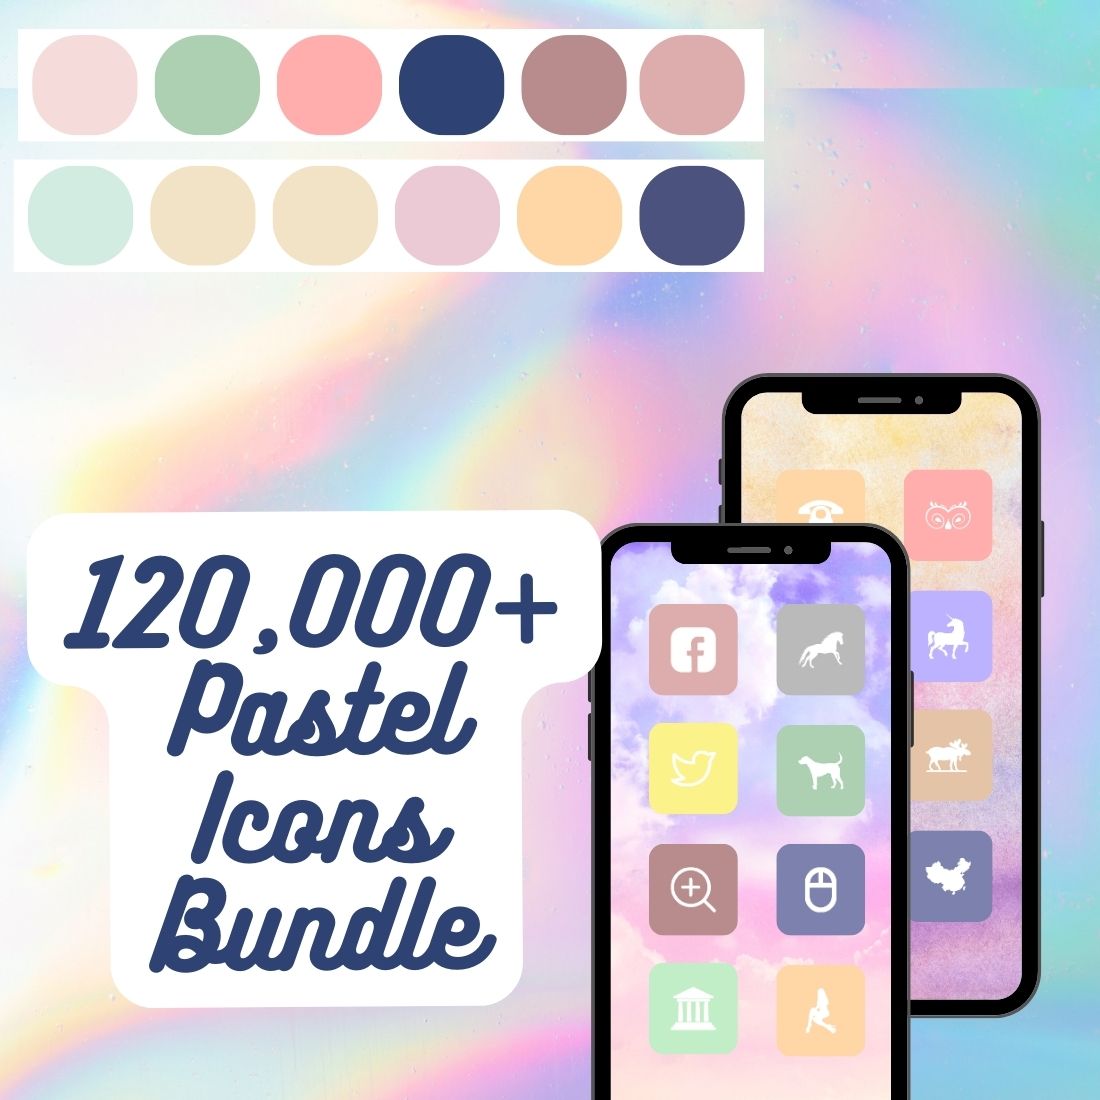 120,000+ Pastel Icon Bundle cover image.